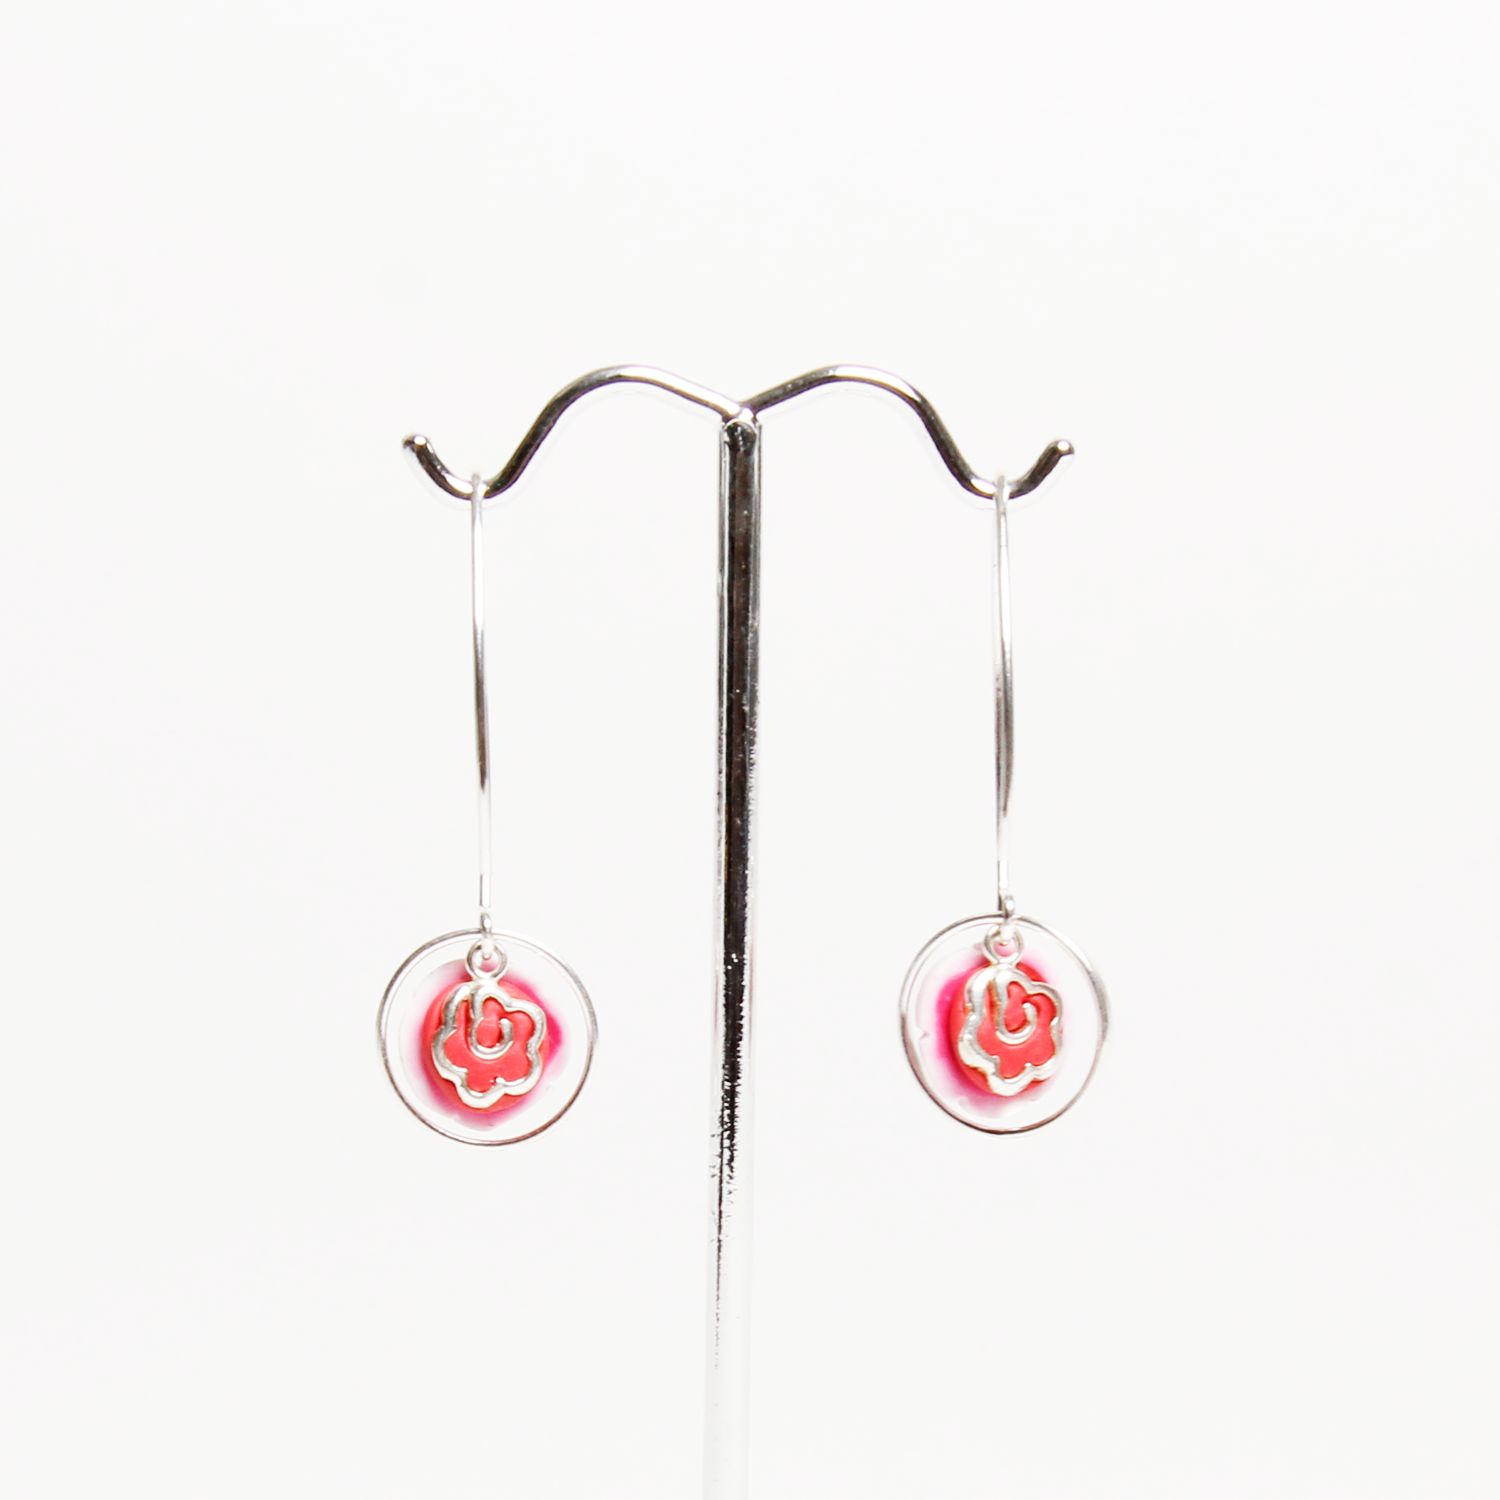 Subtle Details: Pink Soul Earring Product Image 2 of 2